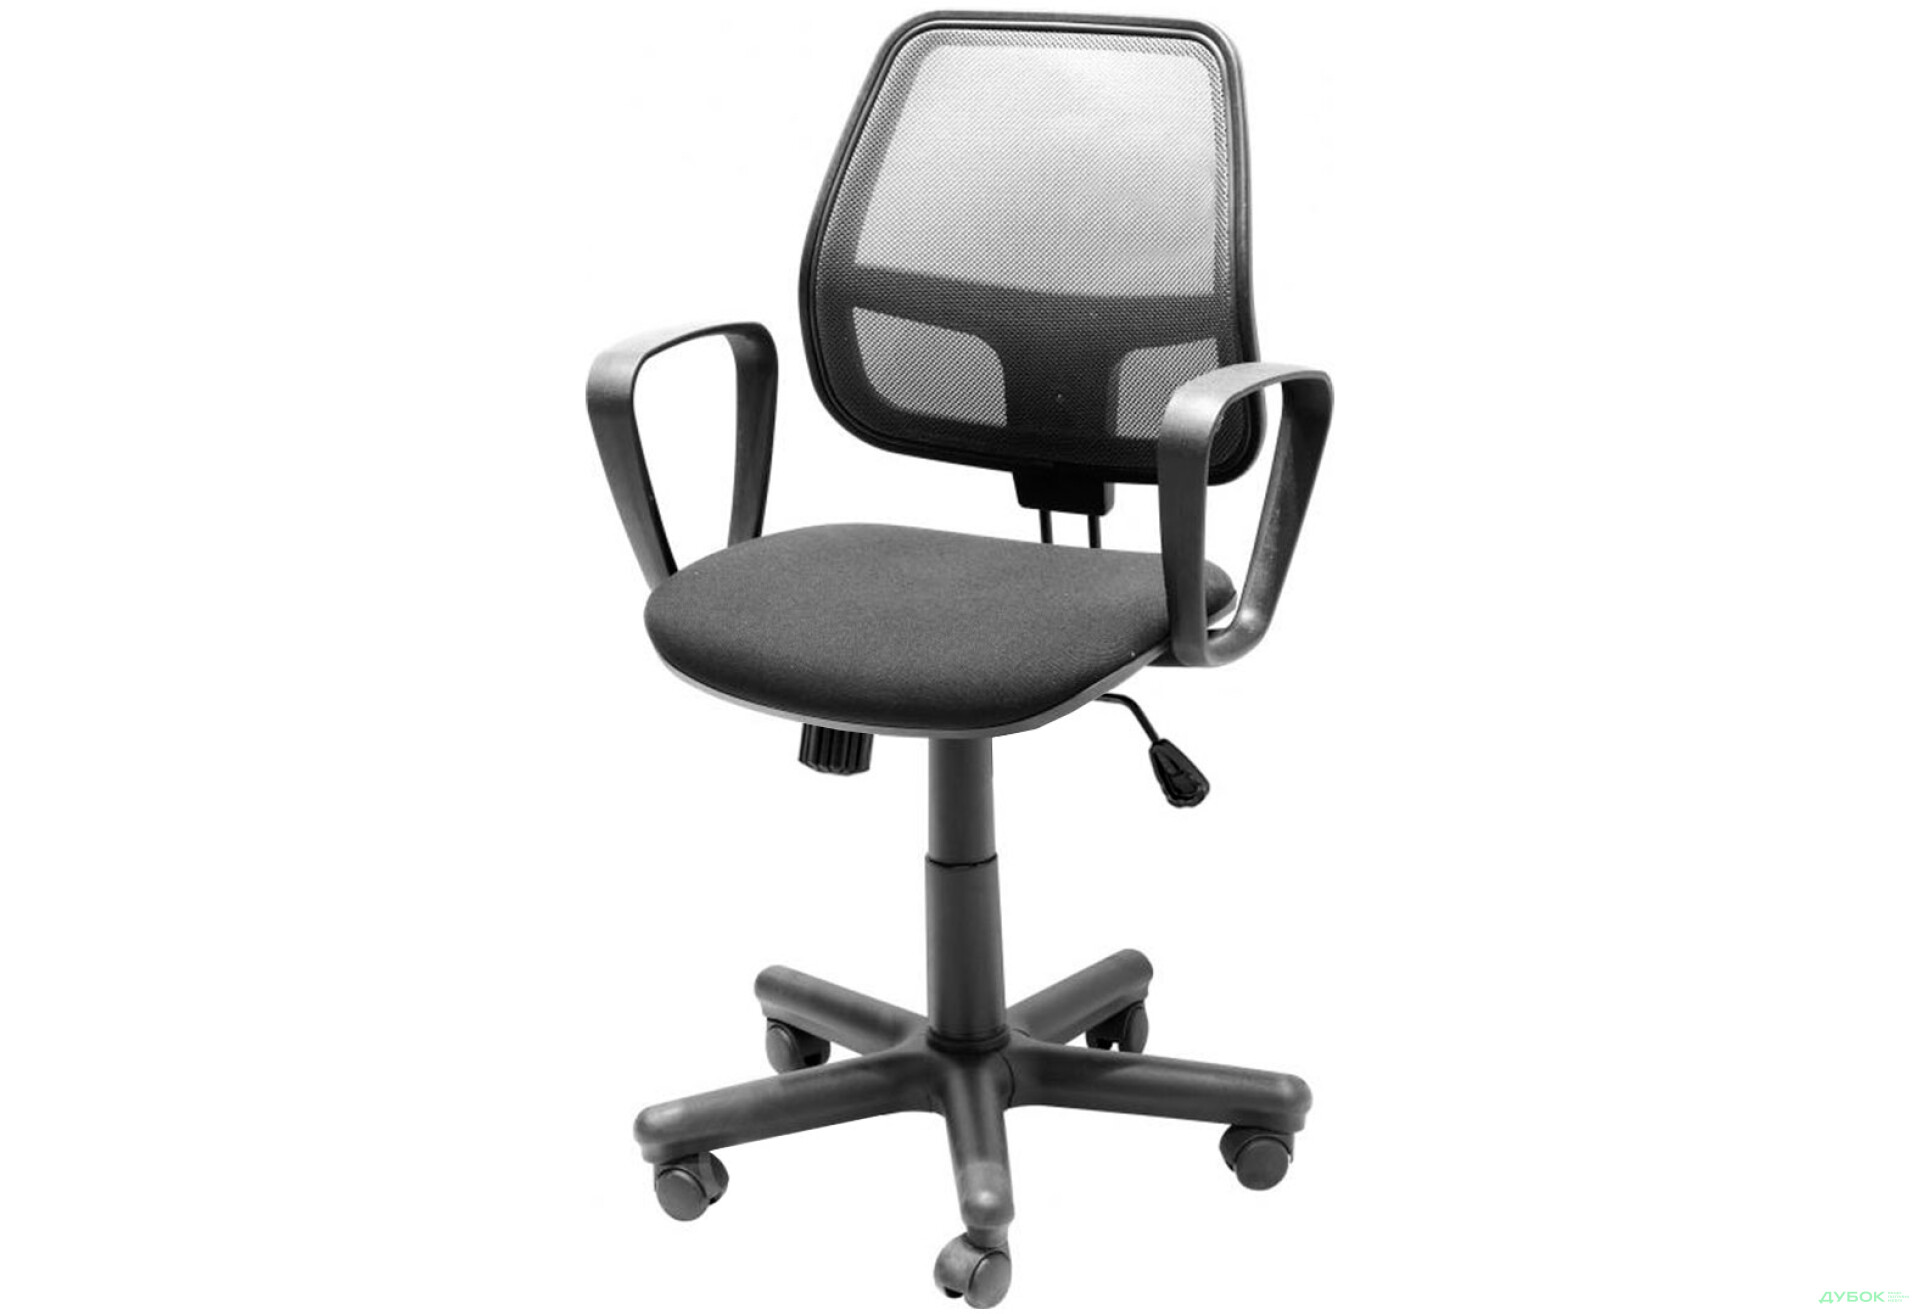 Фото 1 - Компьютерное кресло Новый Стиль Alfa GTP (J) PM60 56x60x95 см